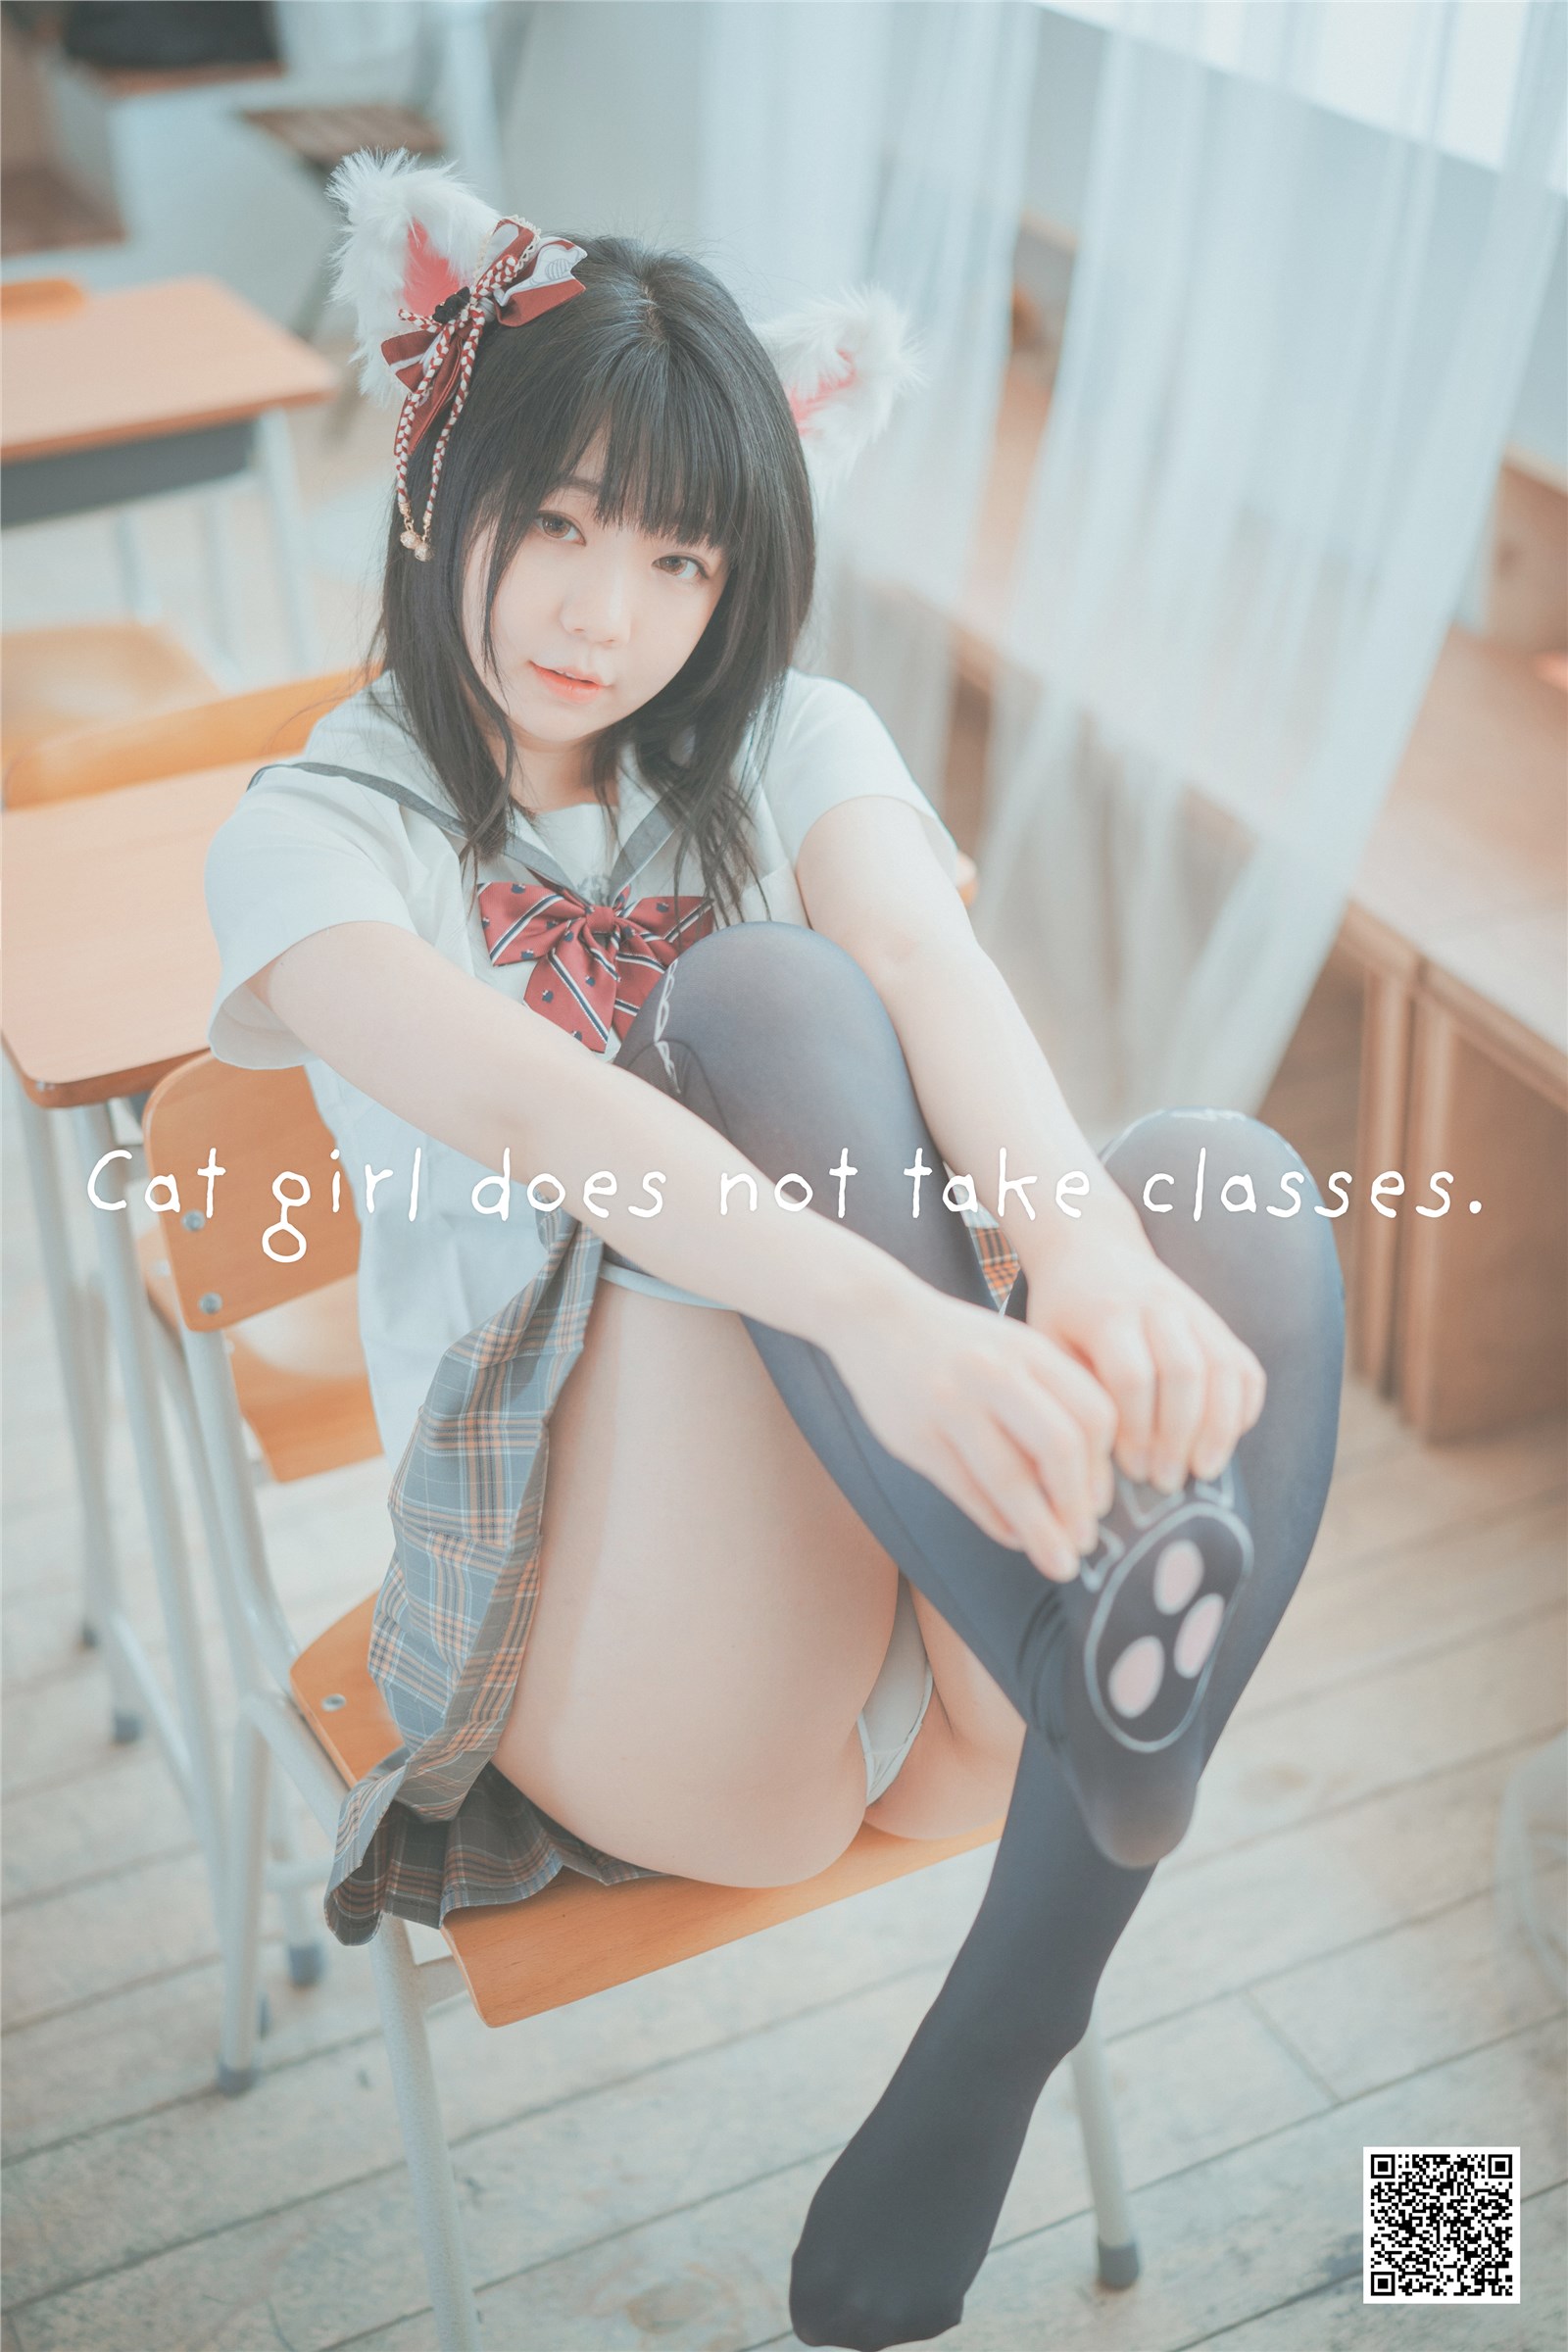 065.DJAWA  Pian - Cat girl doesnt take classes(1)